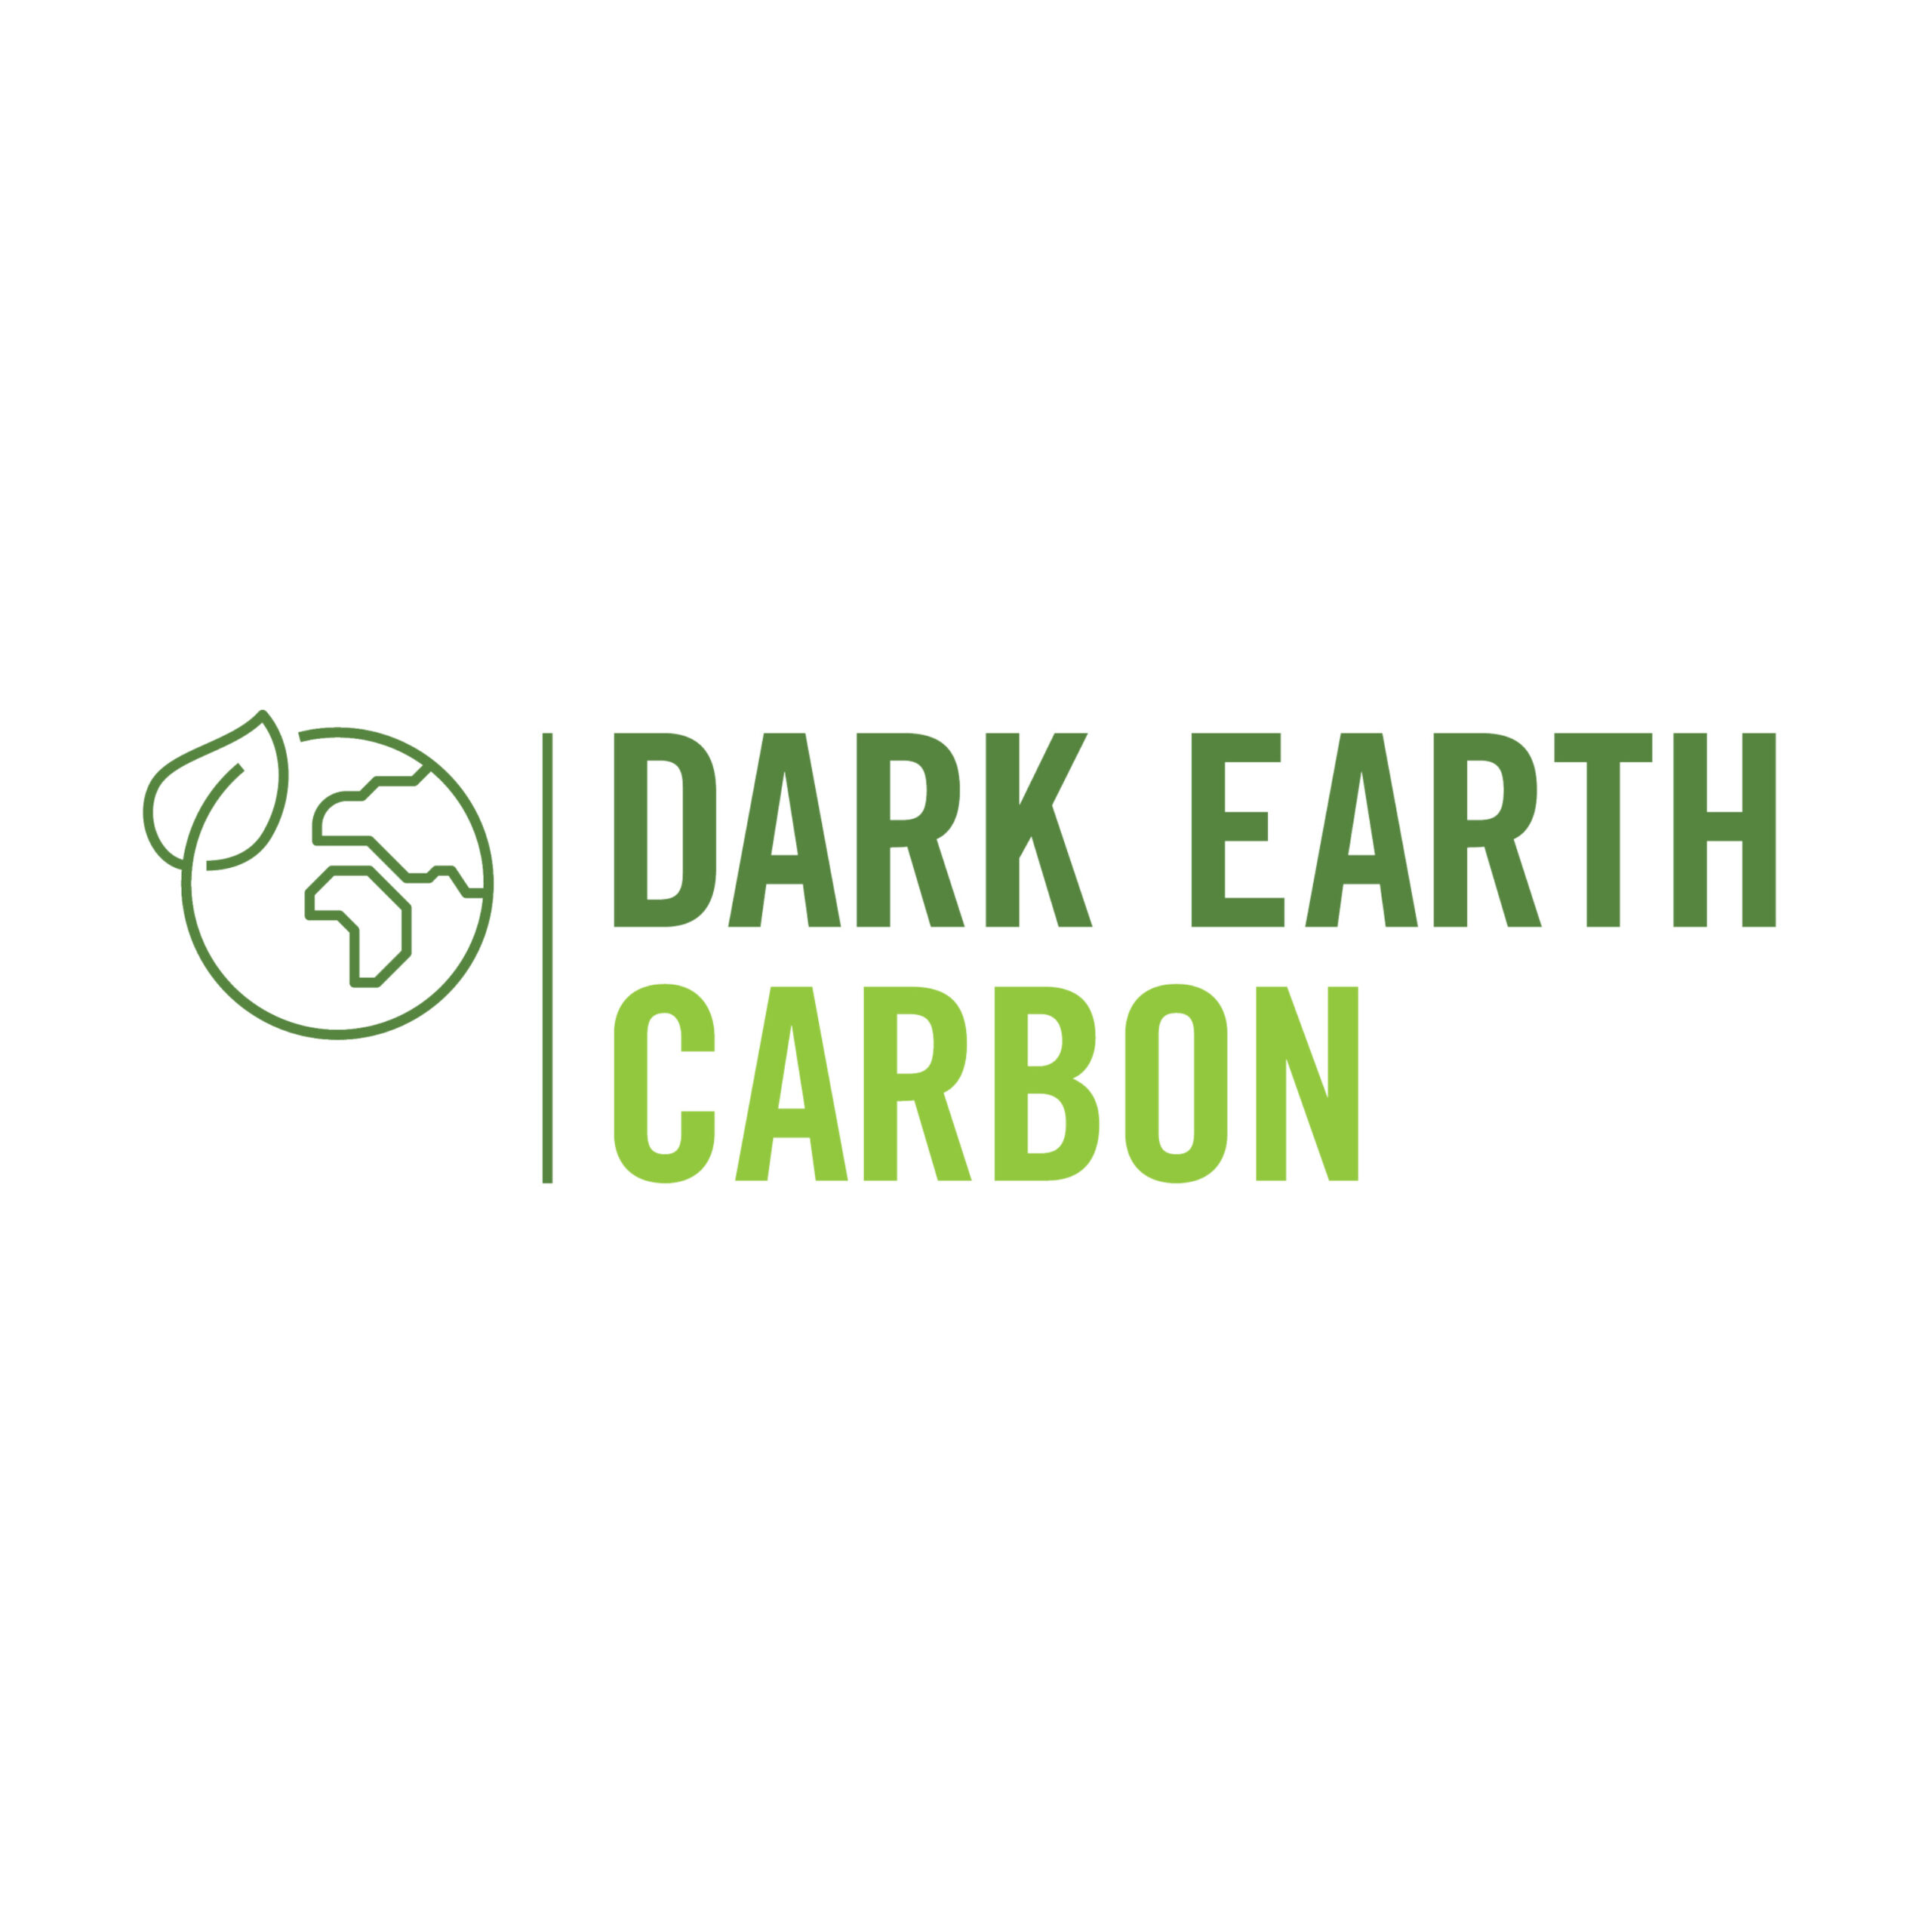 Dark Earth carbon